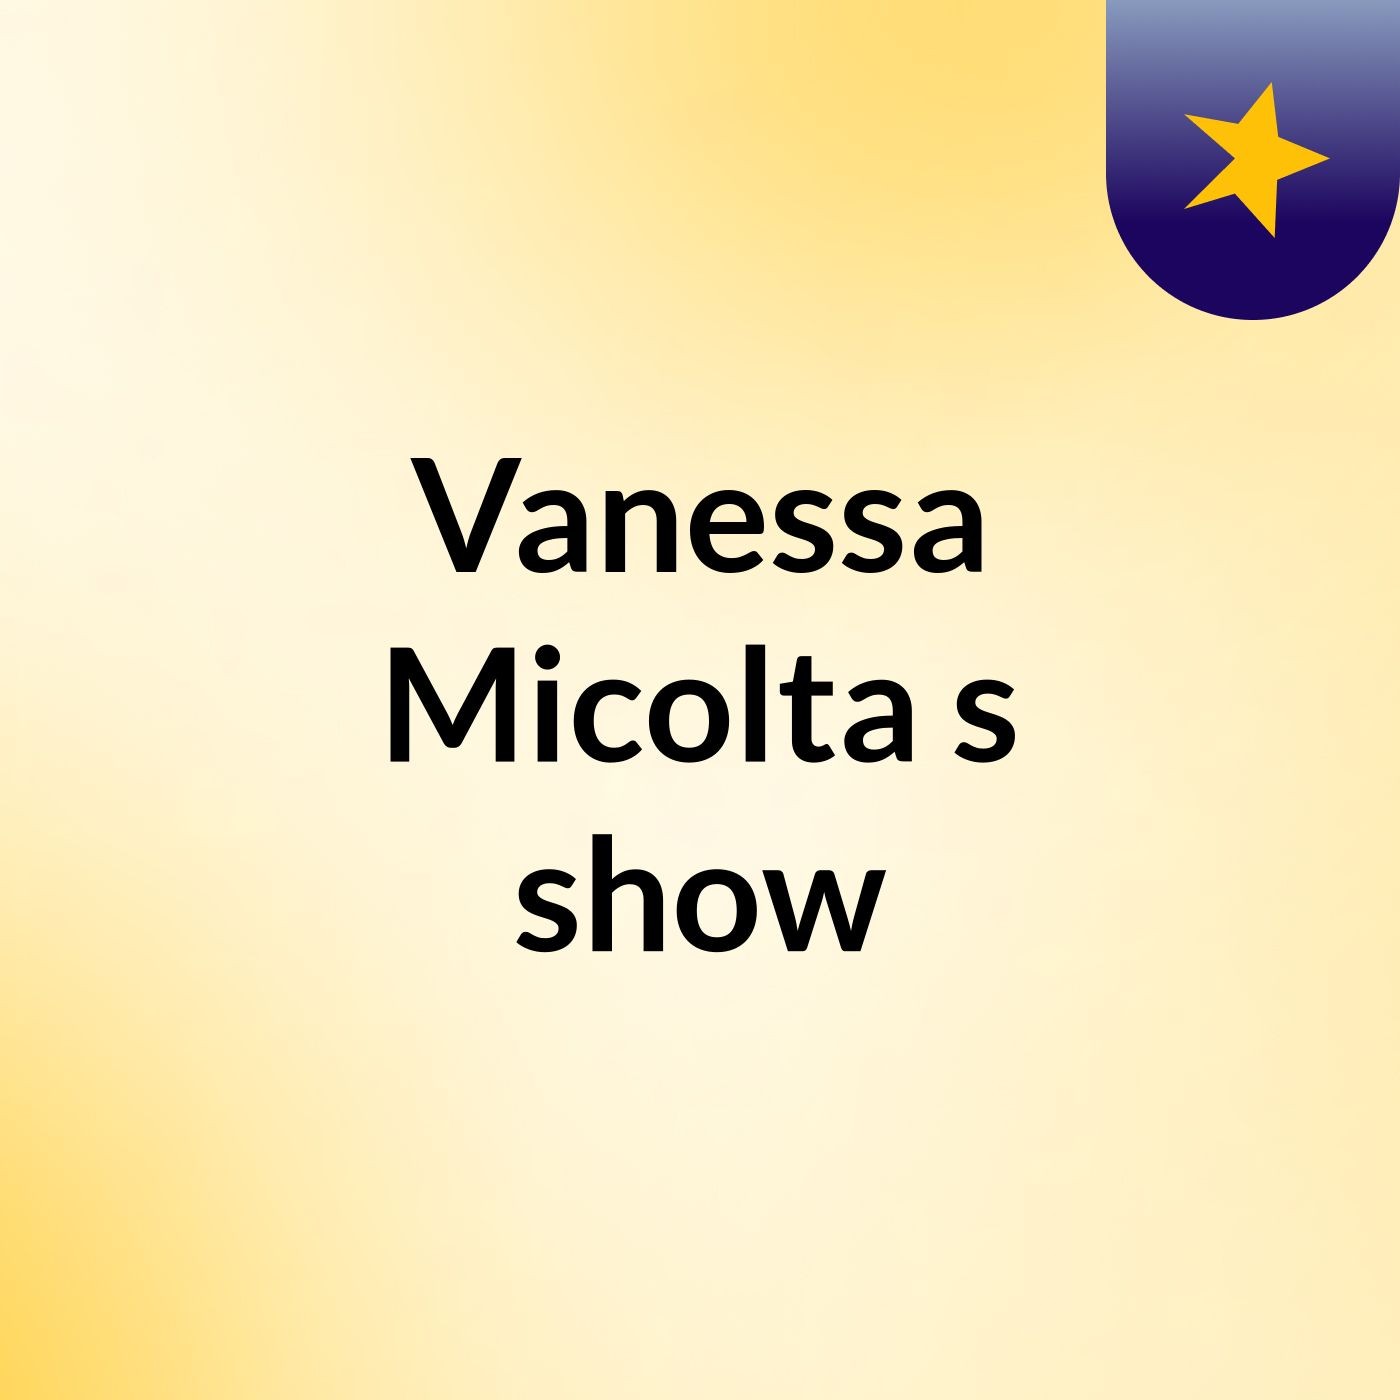 Vanessa Micolta's show